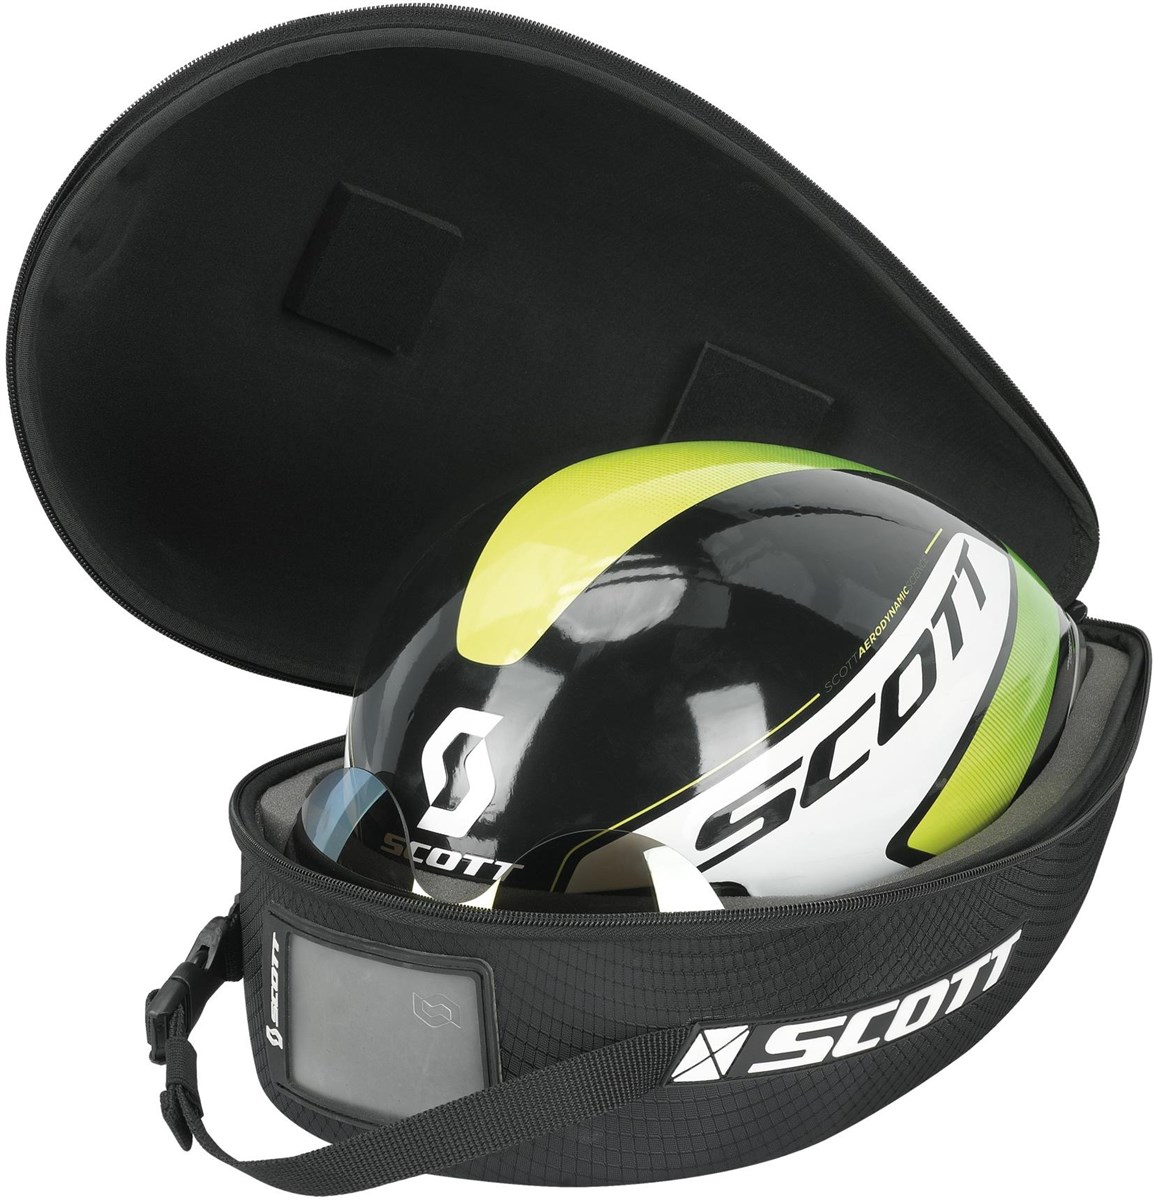 Scott Aerodynamic Helmet Case